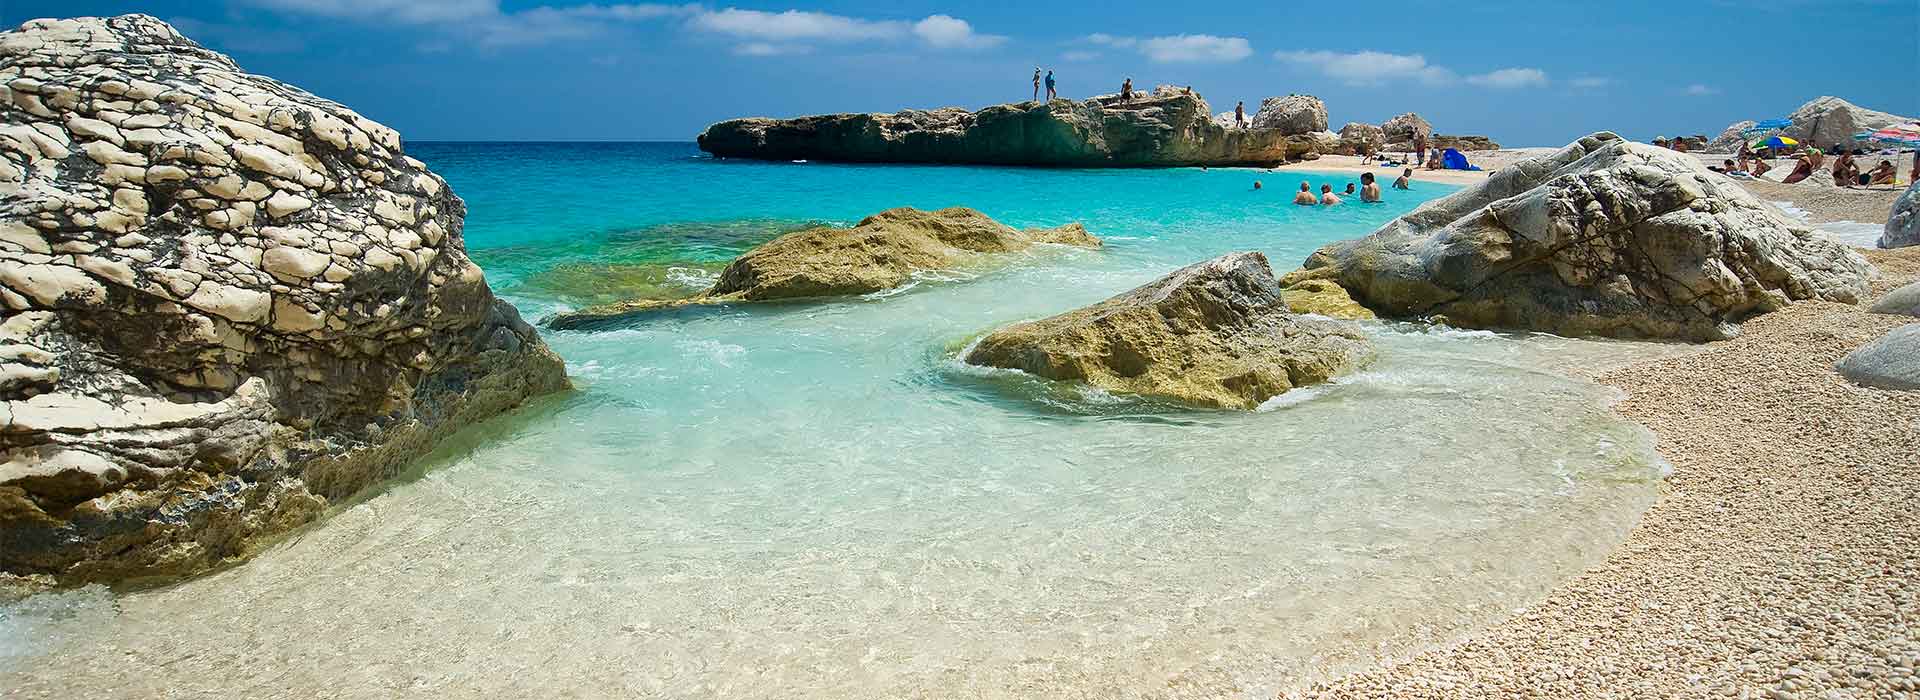 Cala Mariolu – one of the most beautiful beaches of Sardinia, Italy